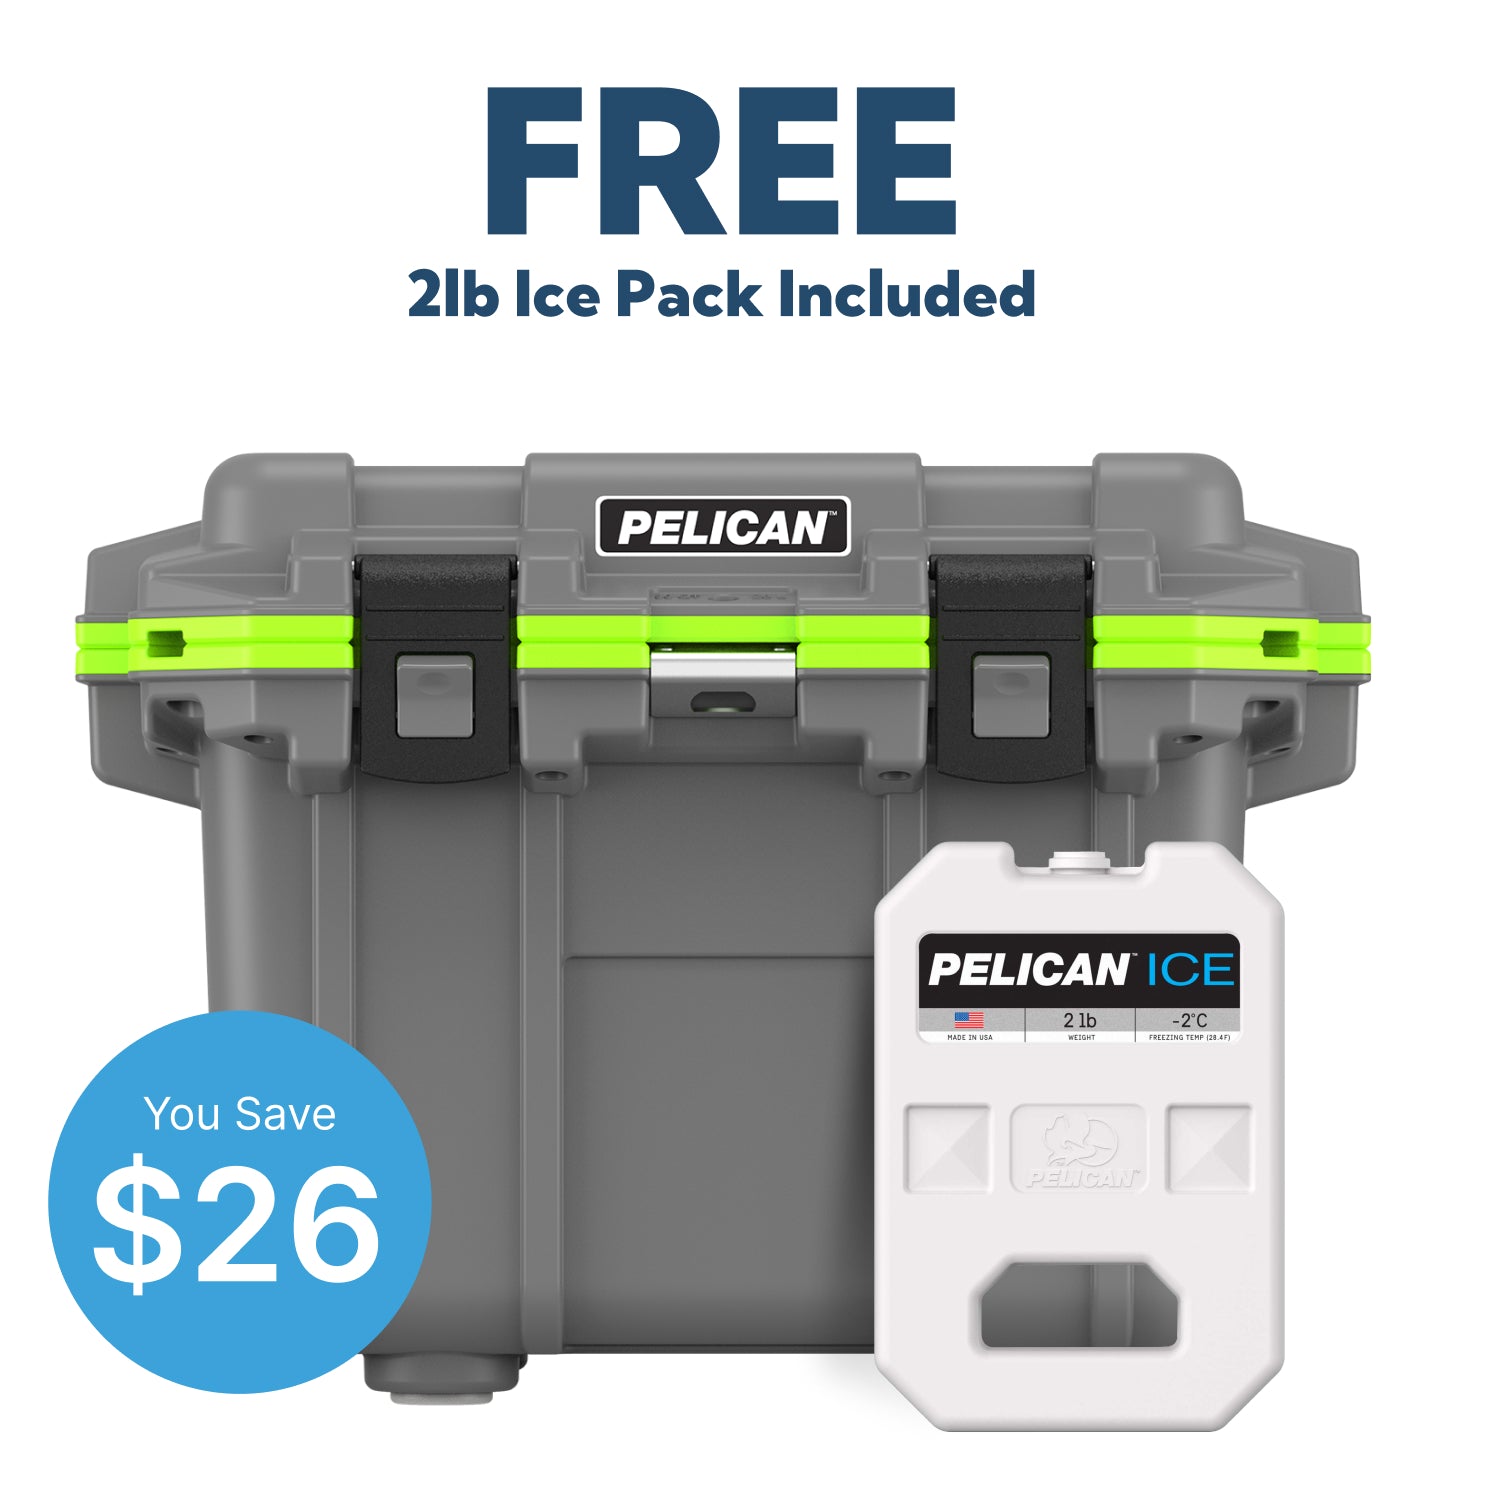 Dark Grey / Green Pelican Cooler and 2lb Free Pelican Ice Pack